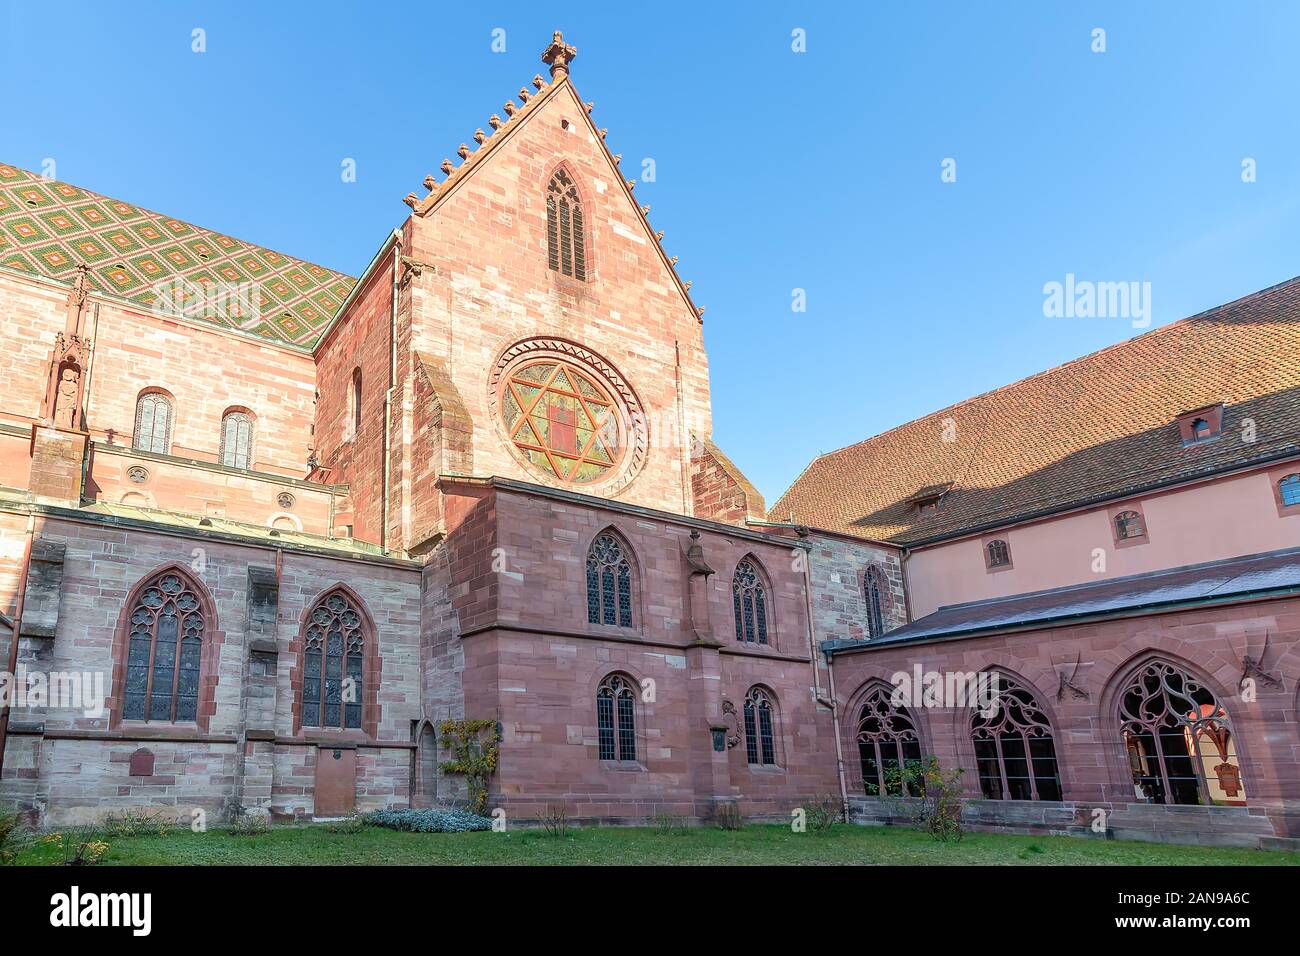 Basler munster cathedral in Basel, Switzerland Stock Photo